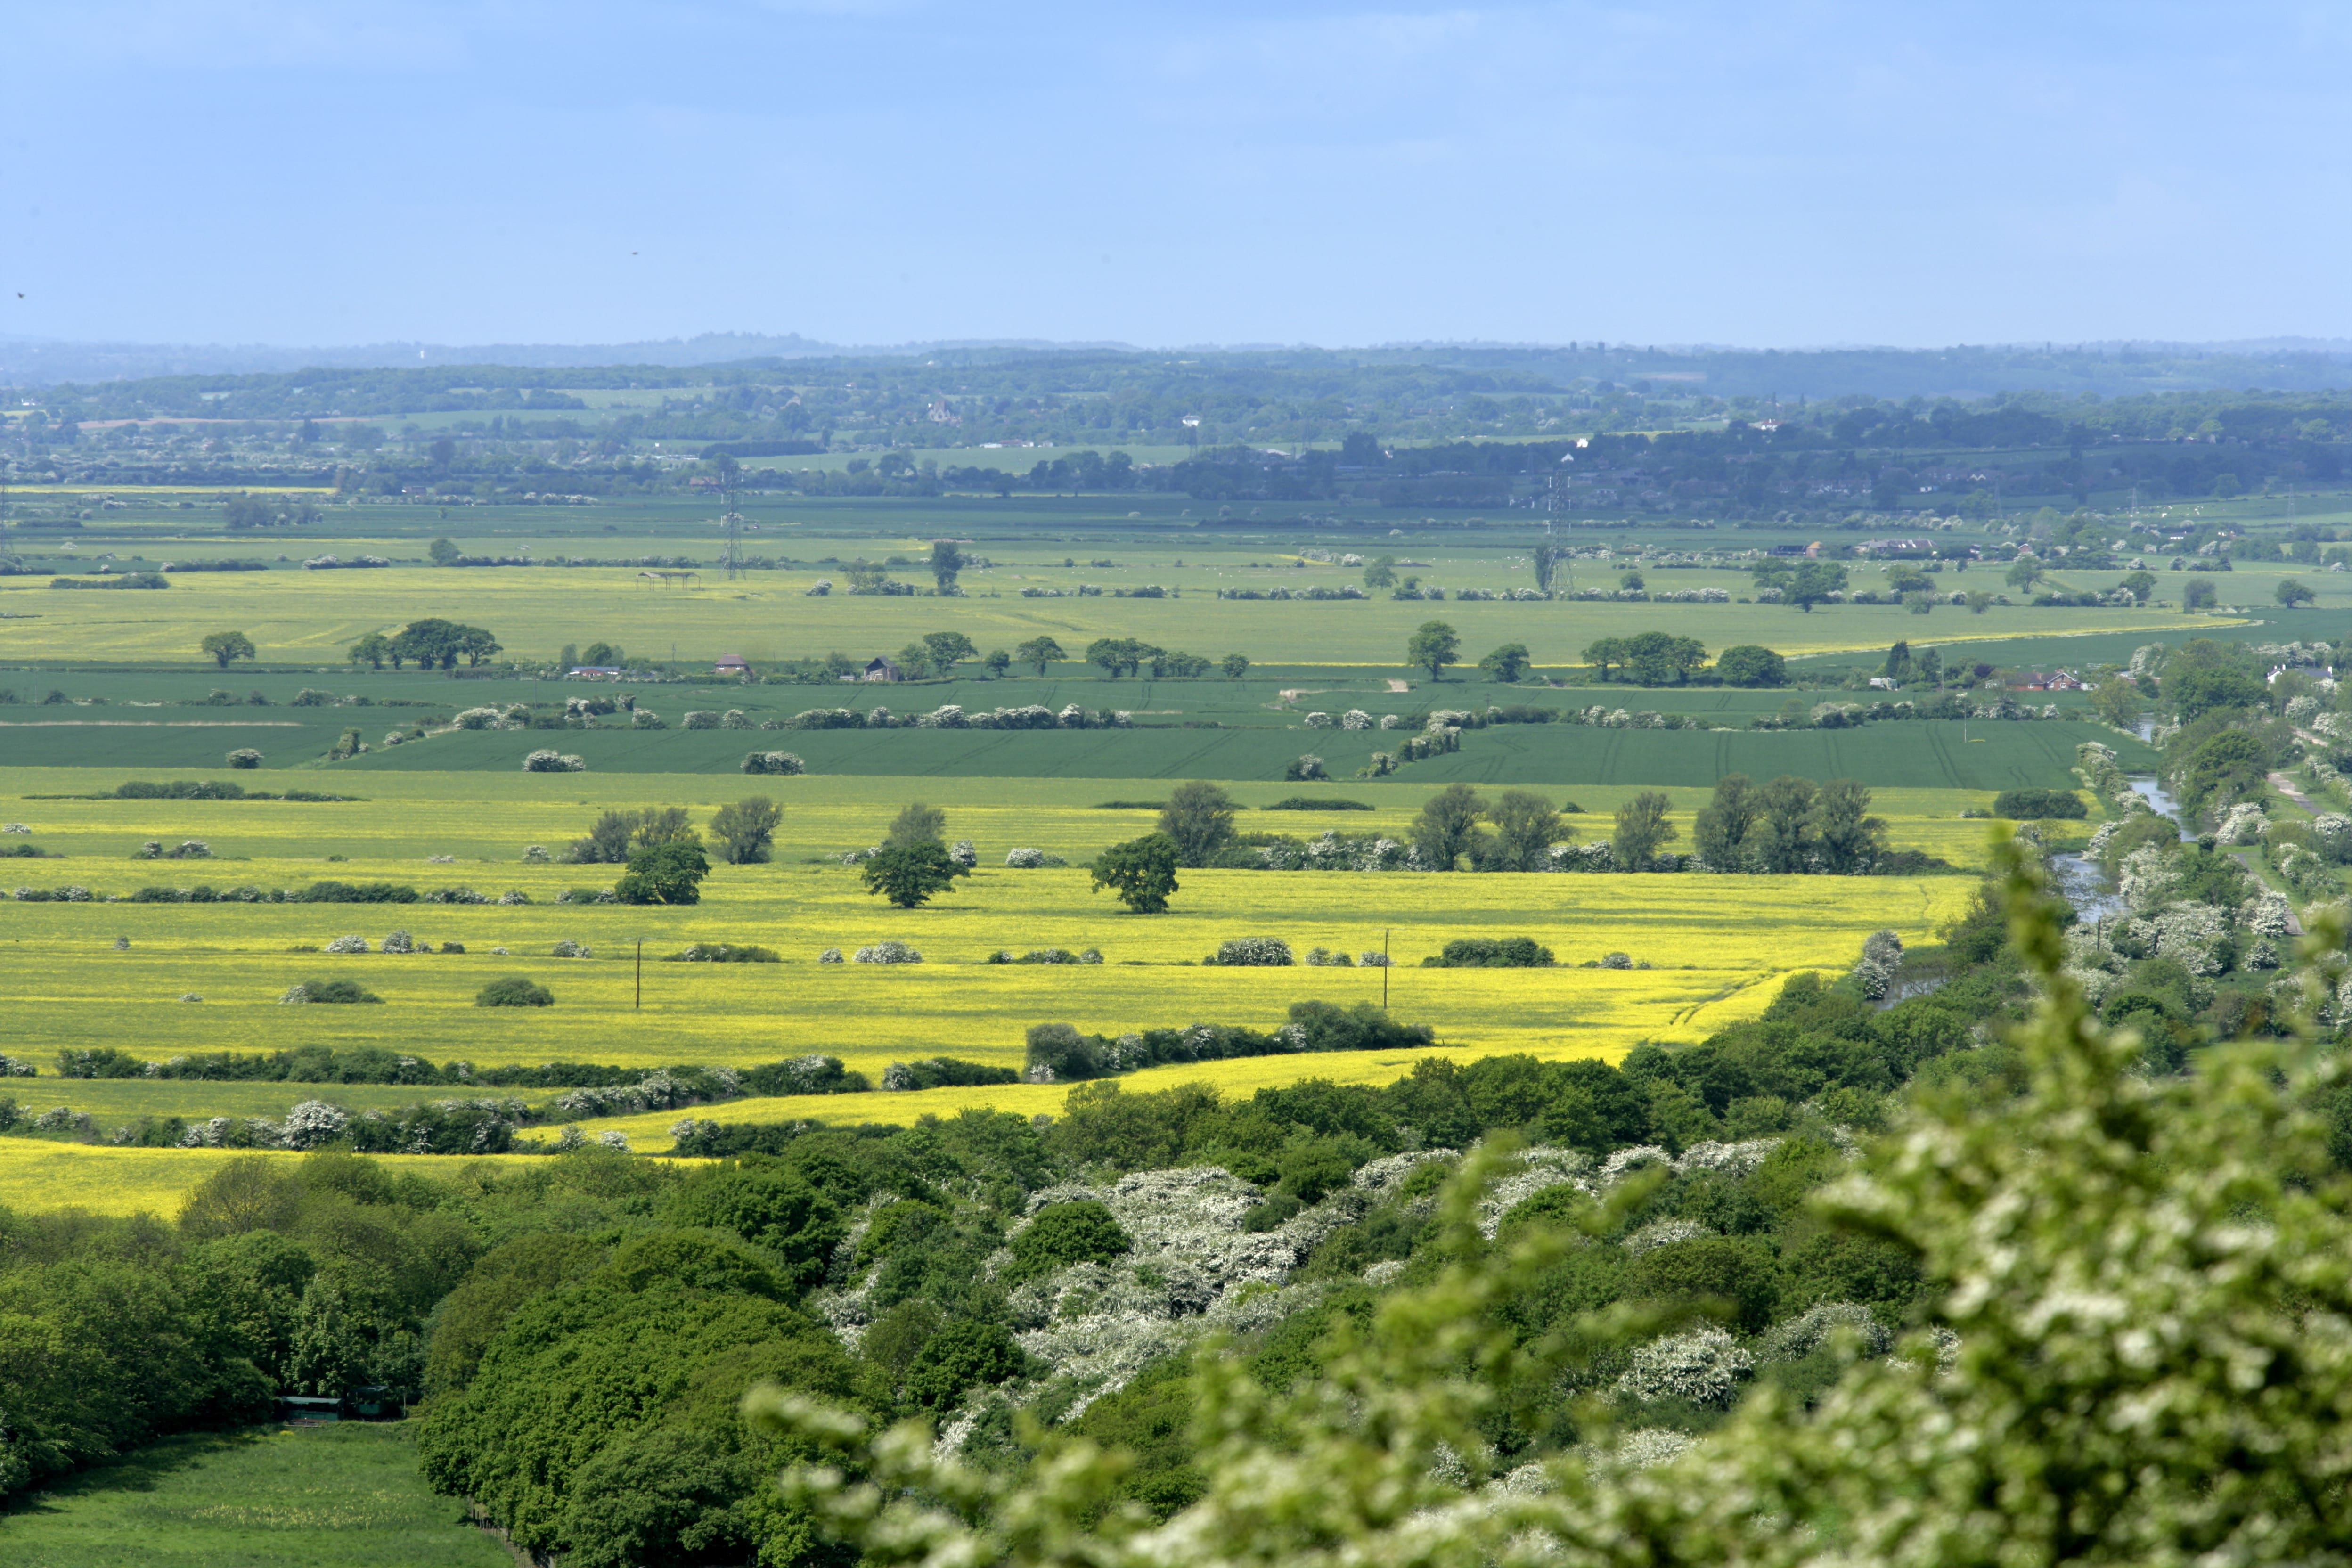 Views across Lympne, green fields, crop fields and trees.